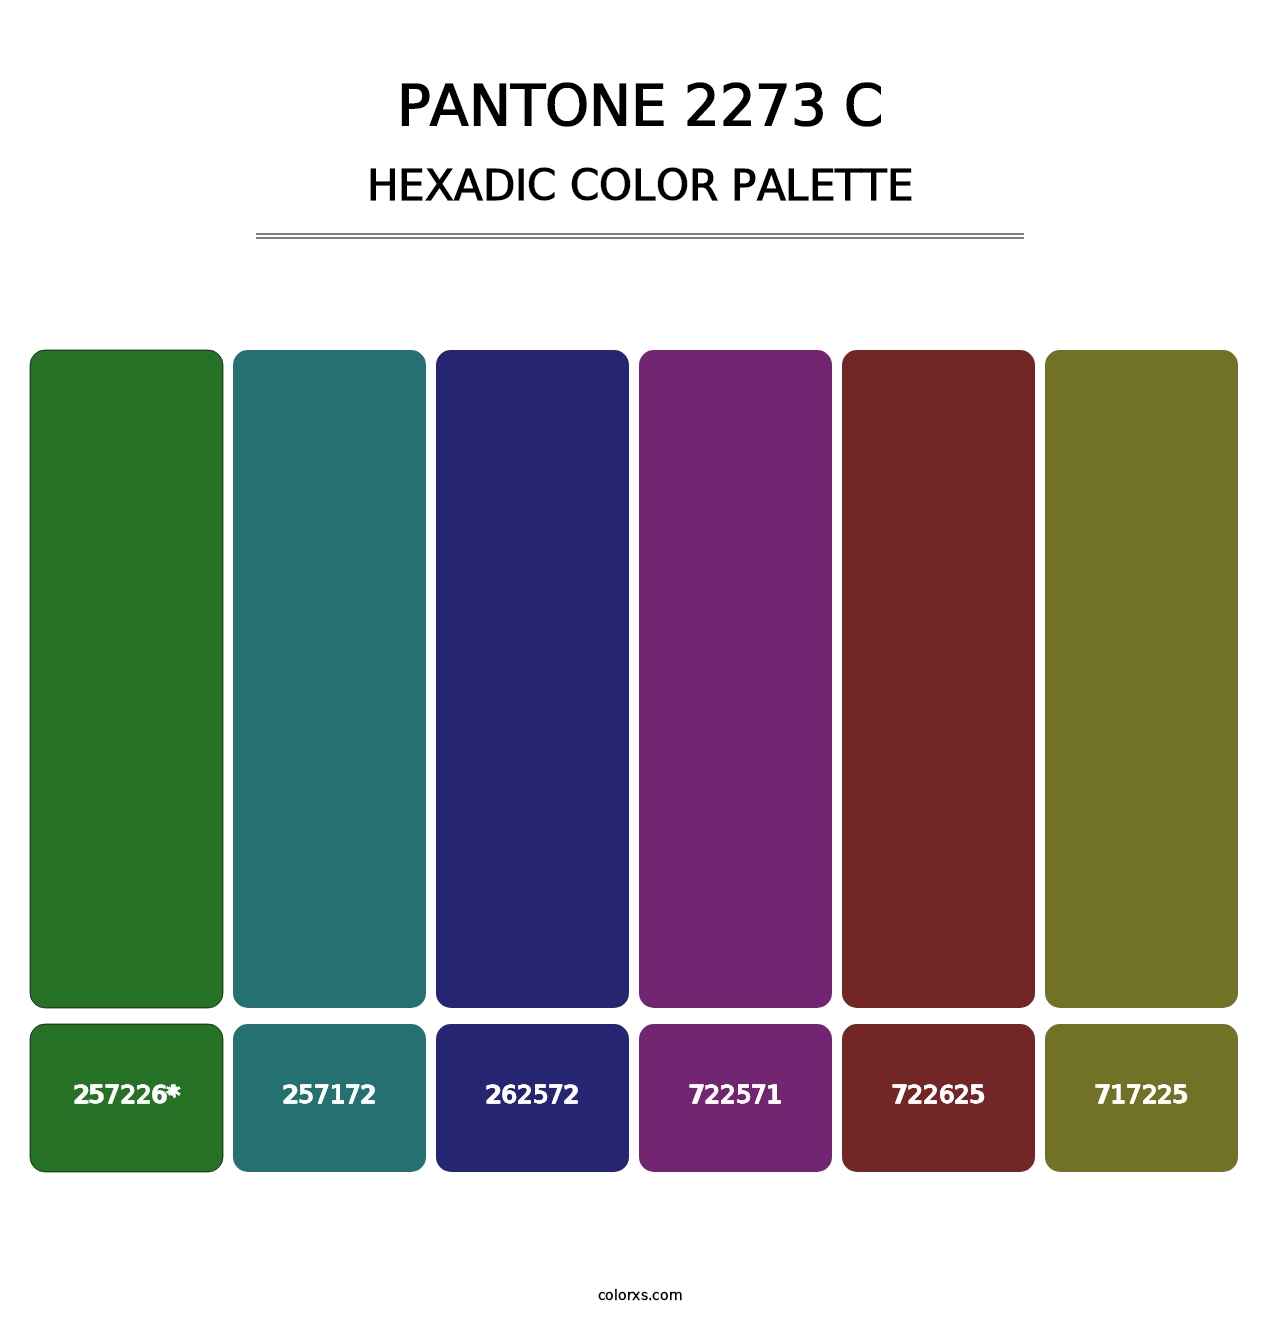 PANTONE 2273 C - Hexadic Color Palette